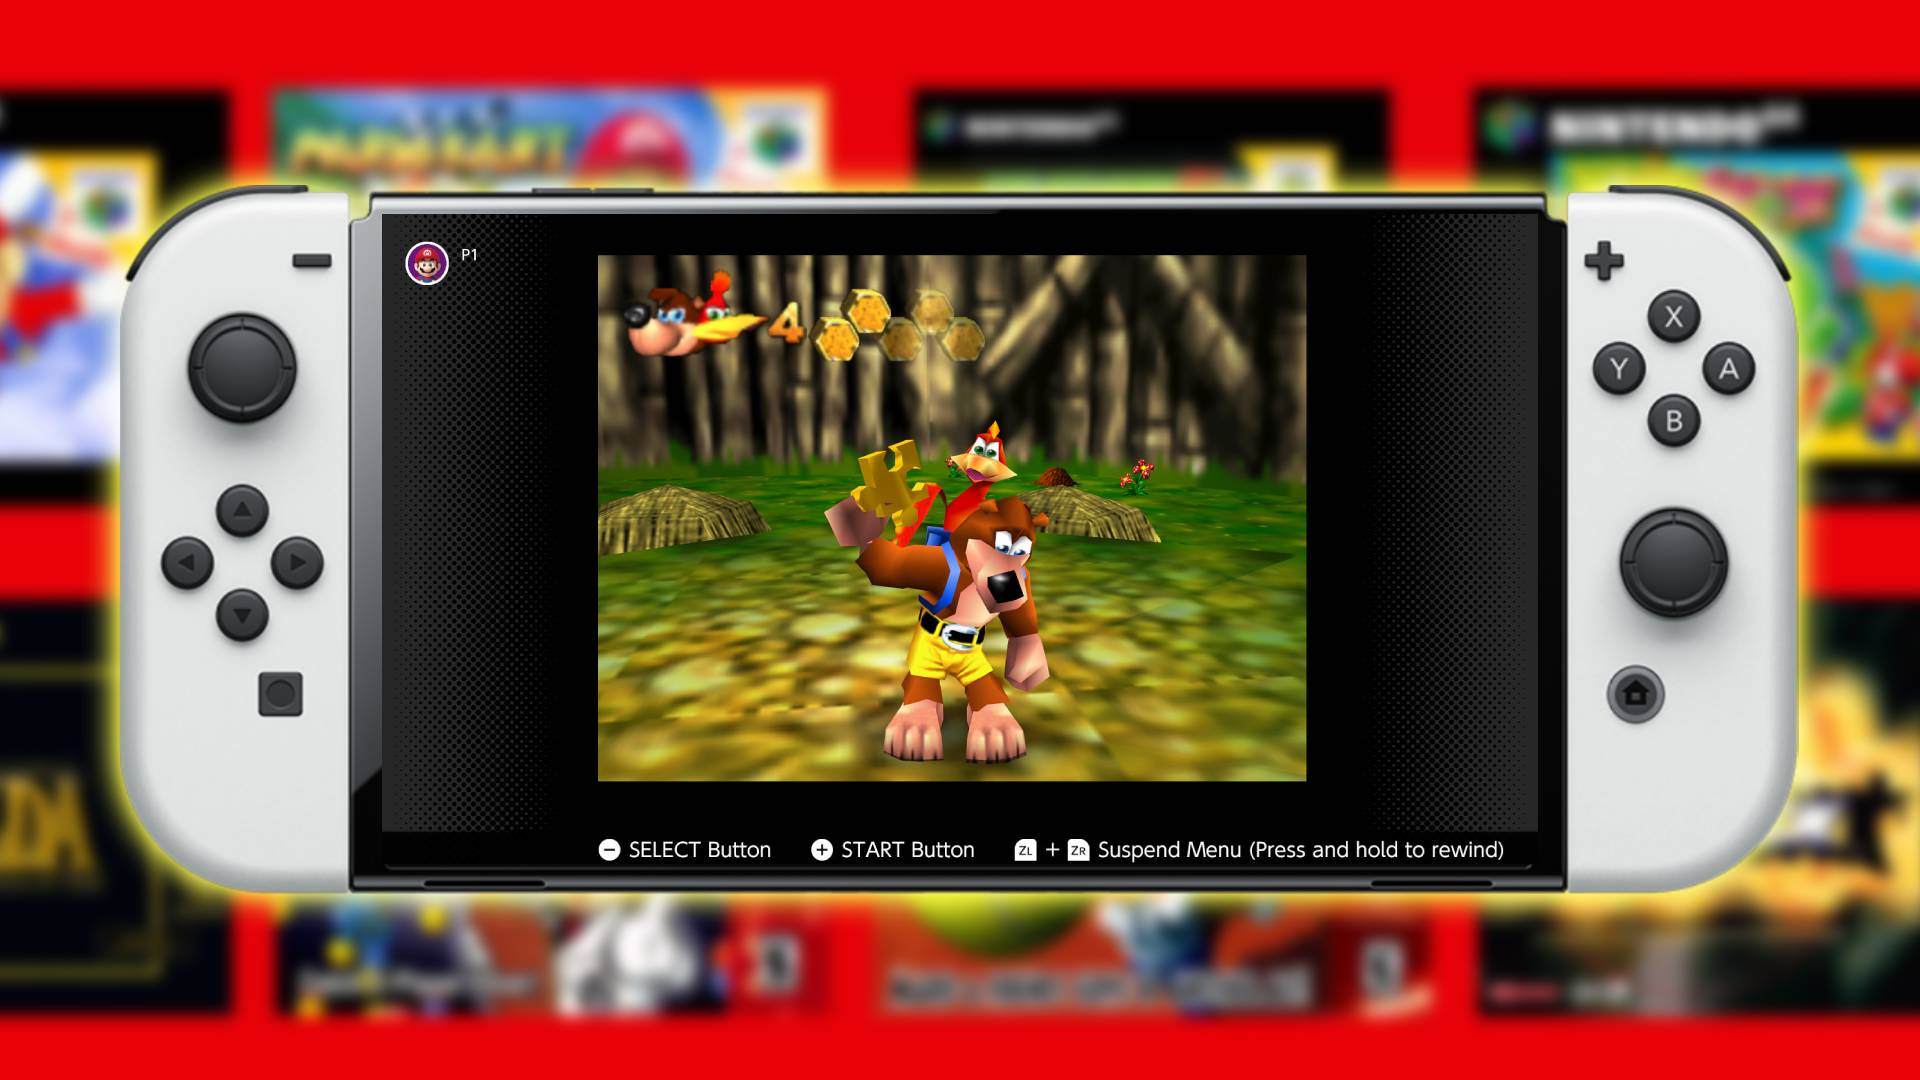 Nintendo Direct highlights: N64 Online in October, Super Mario